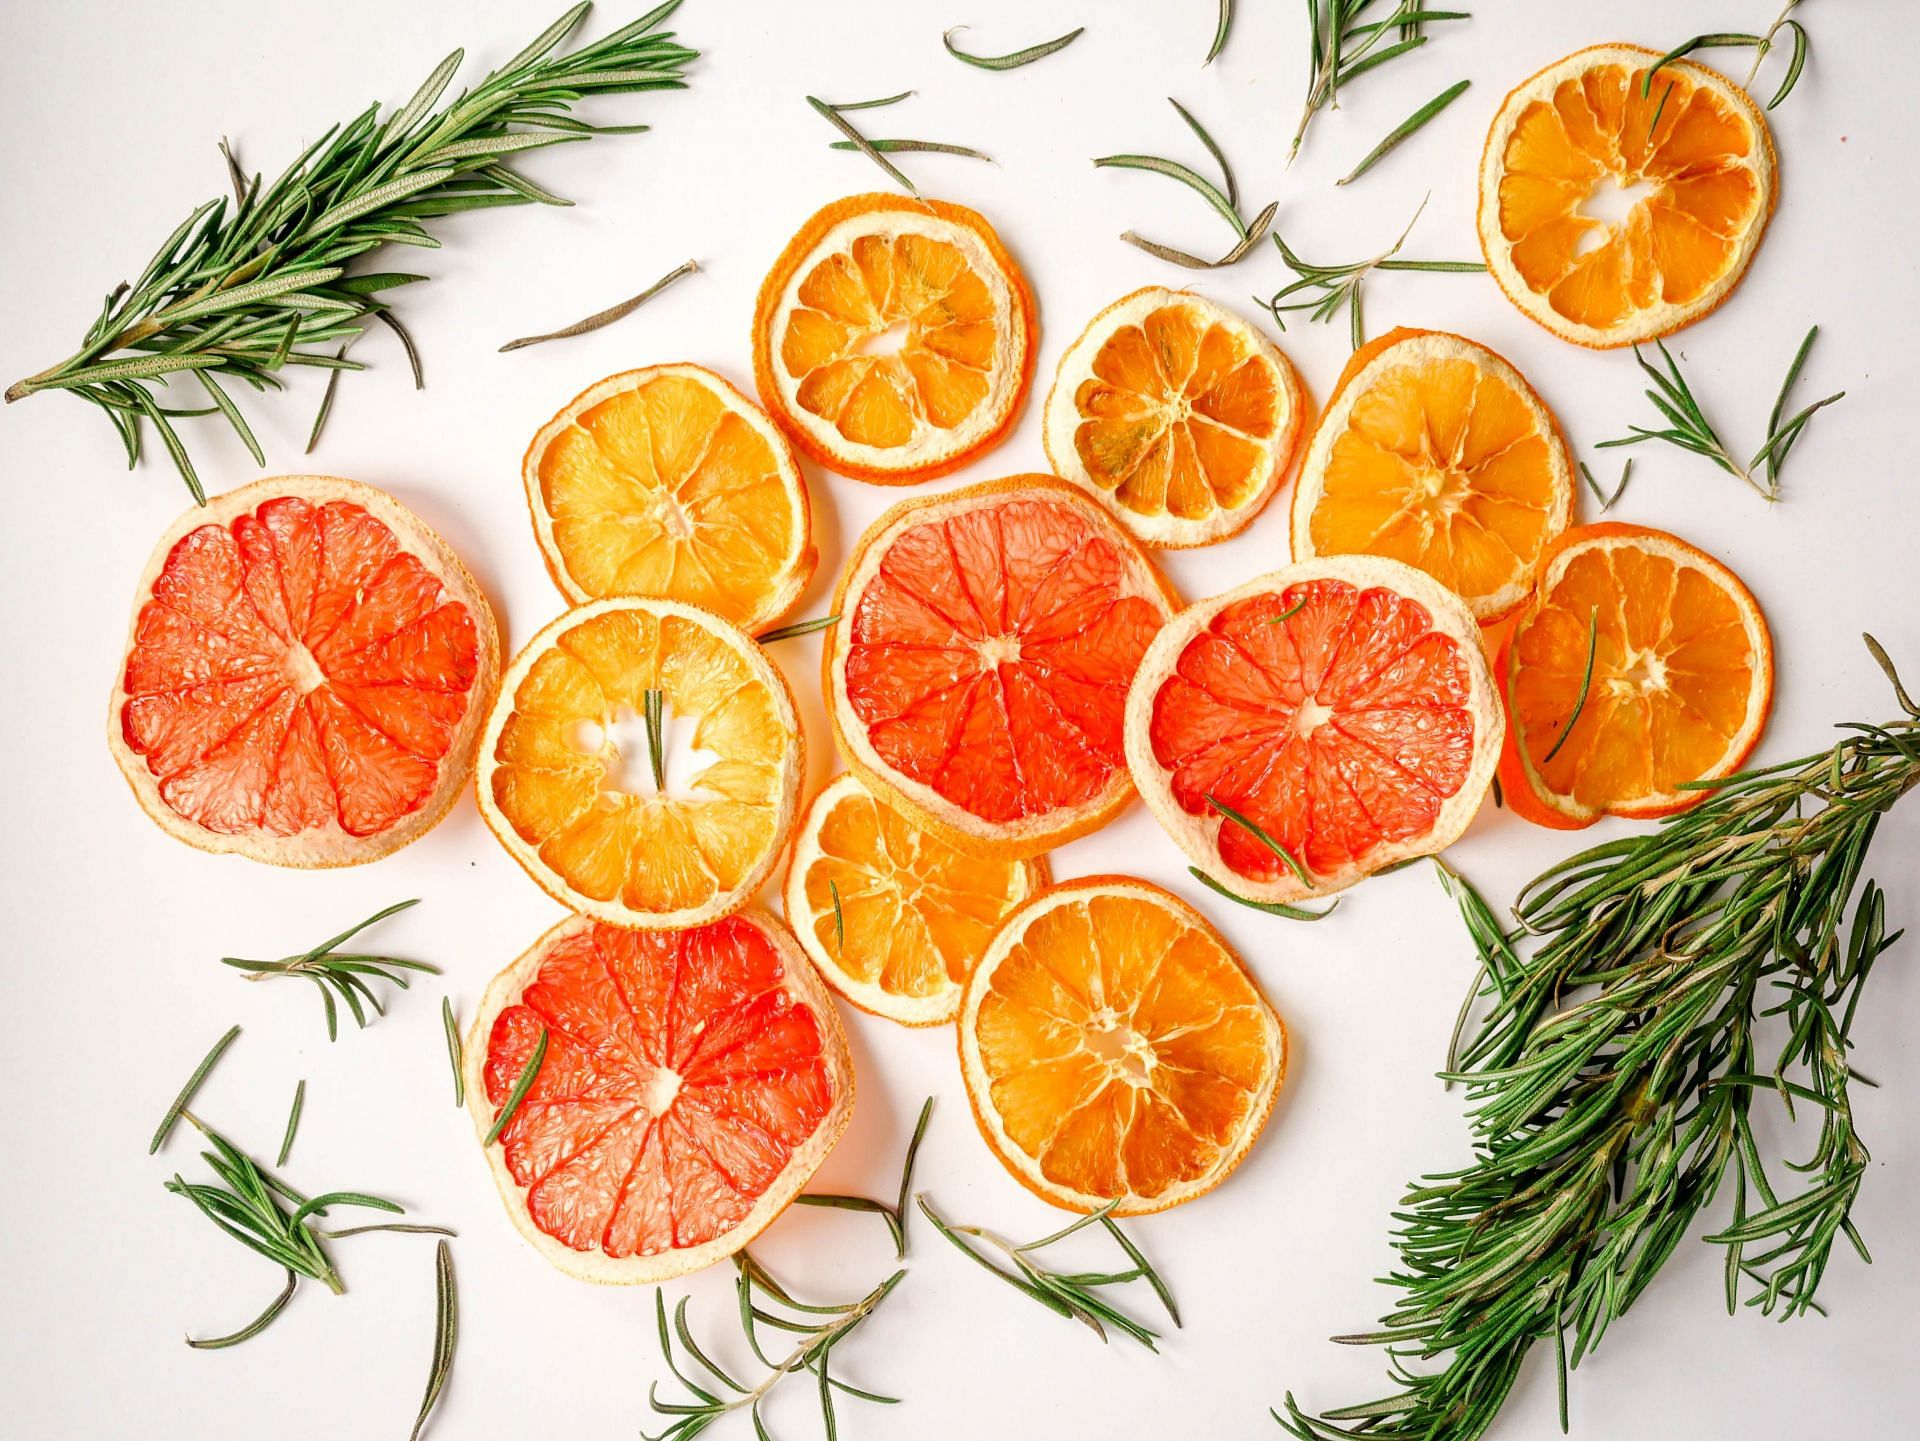 Side effects of blood orange (Image via Unsplash/Kathryn)